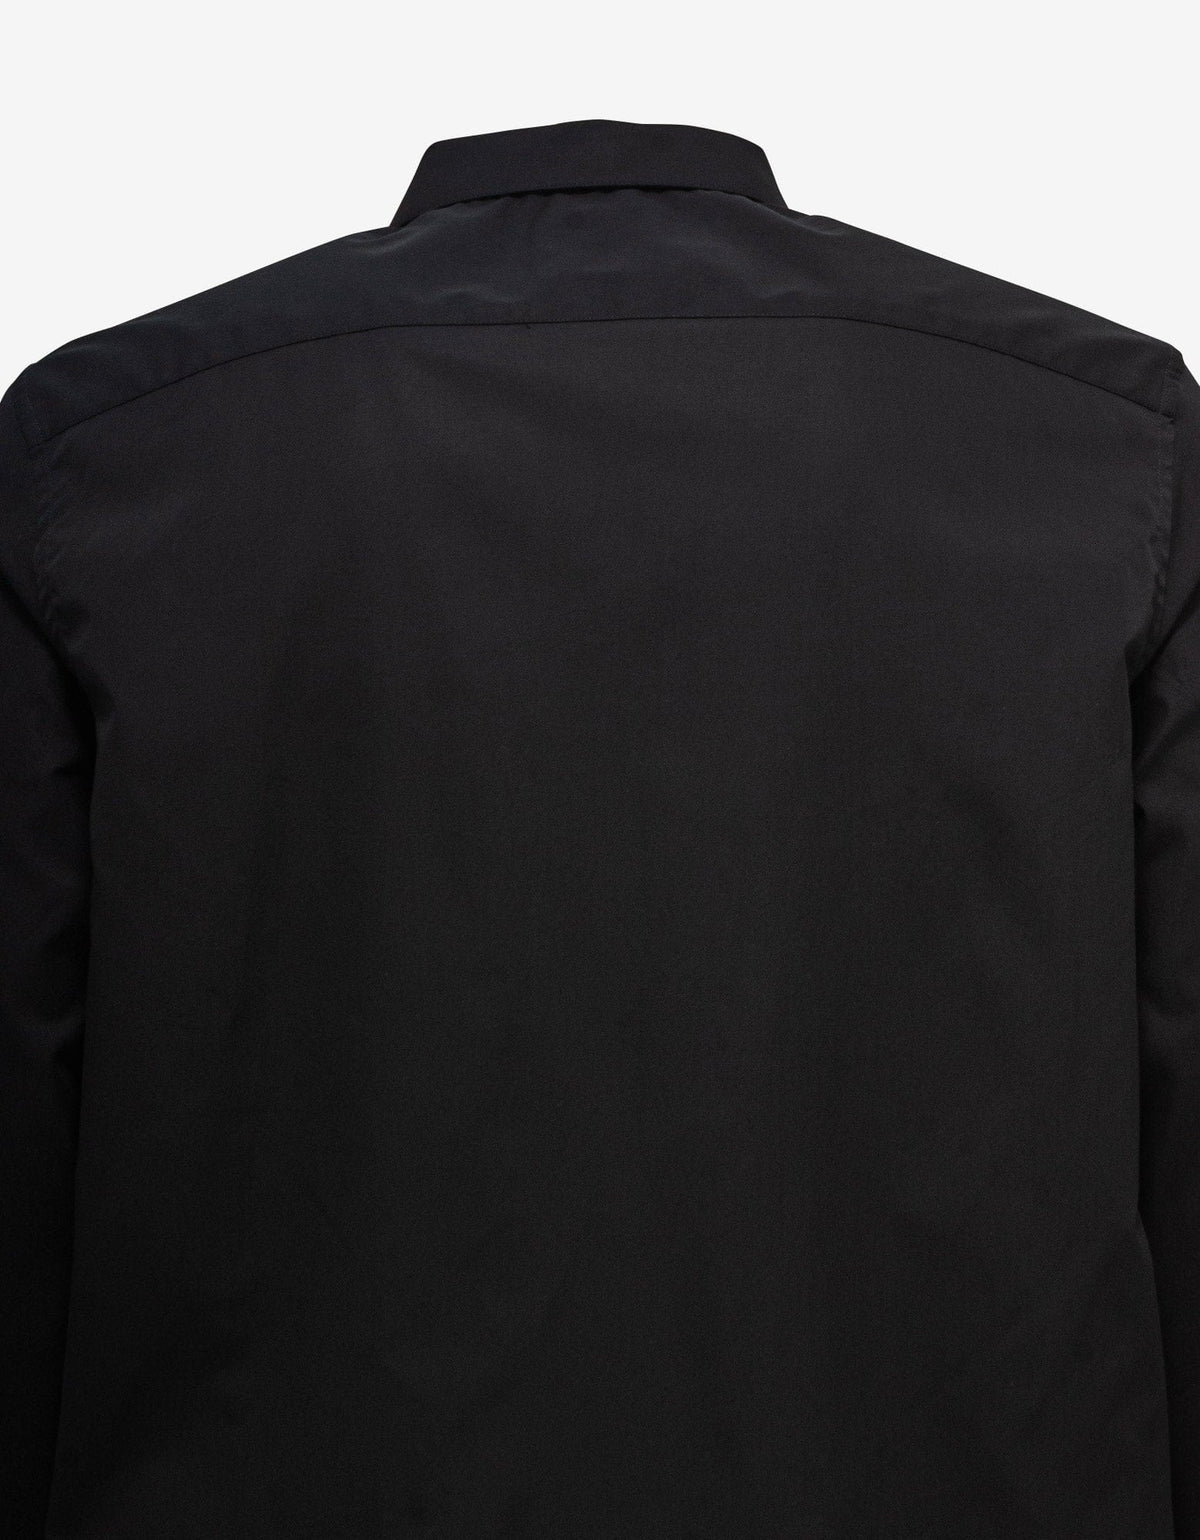 Givenchy Black Archetype Logo Zip Shirt